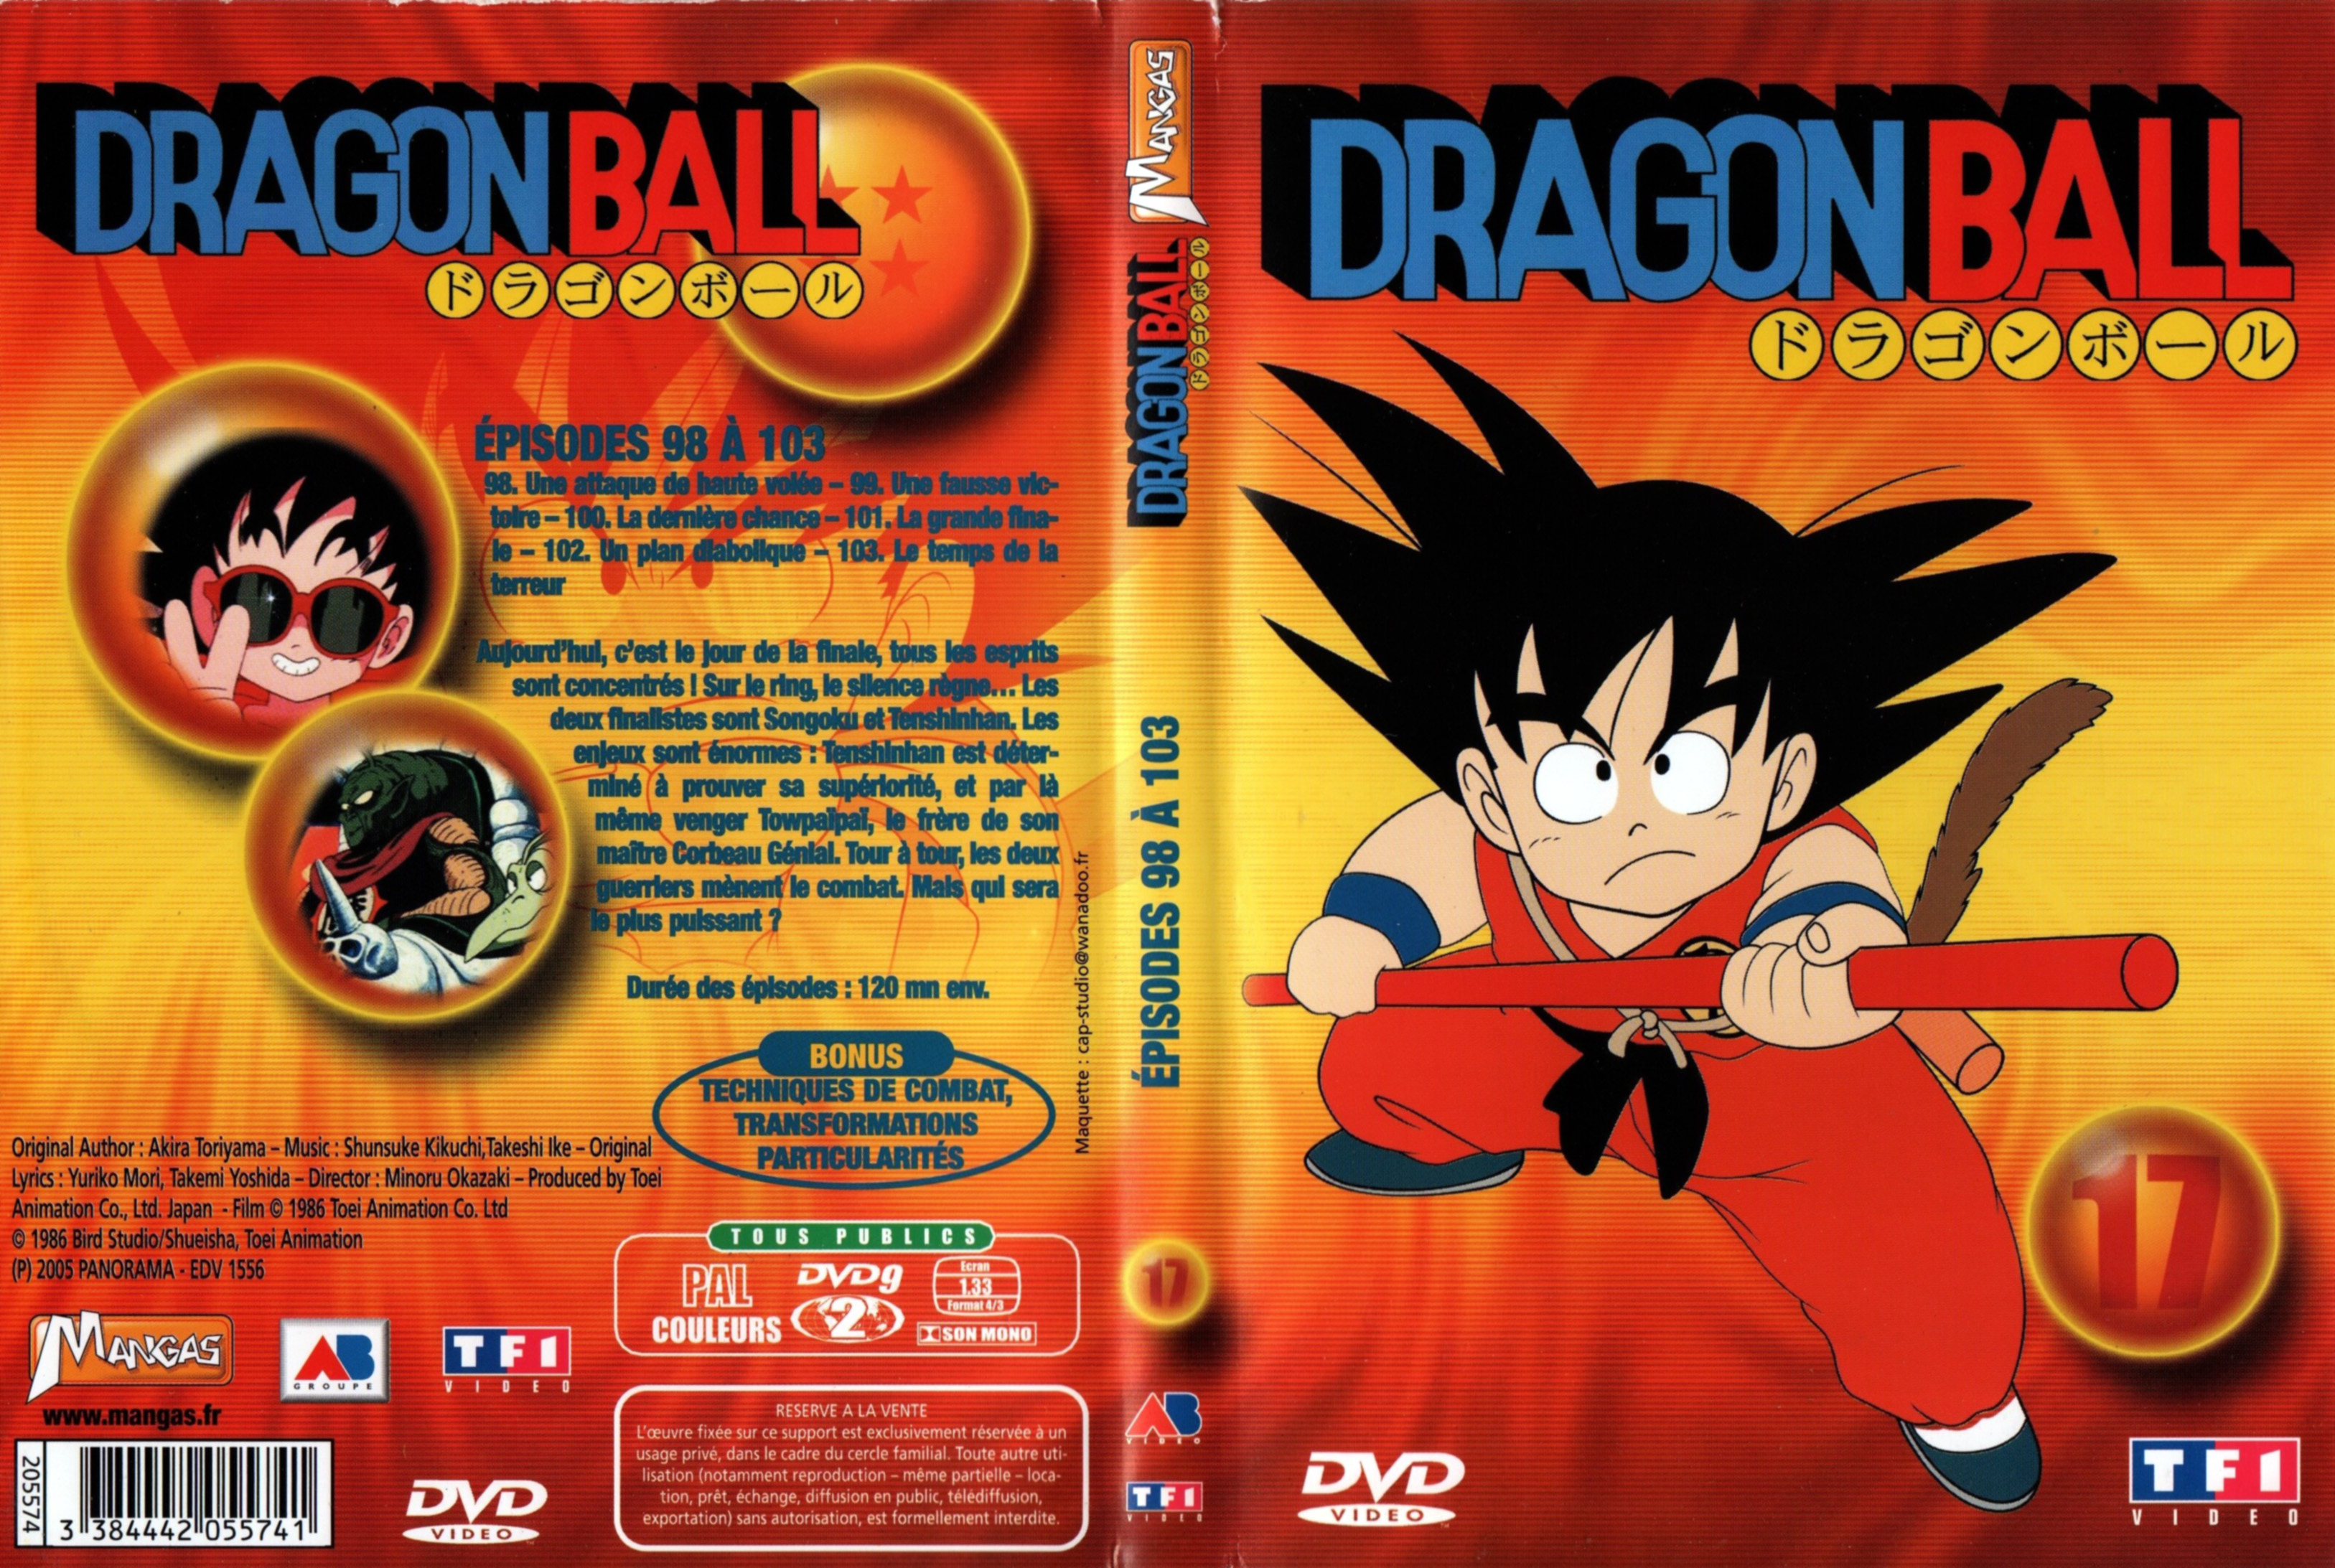 Jaquette DVD Dragon ball vol 17 v3